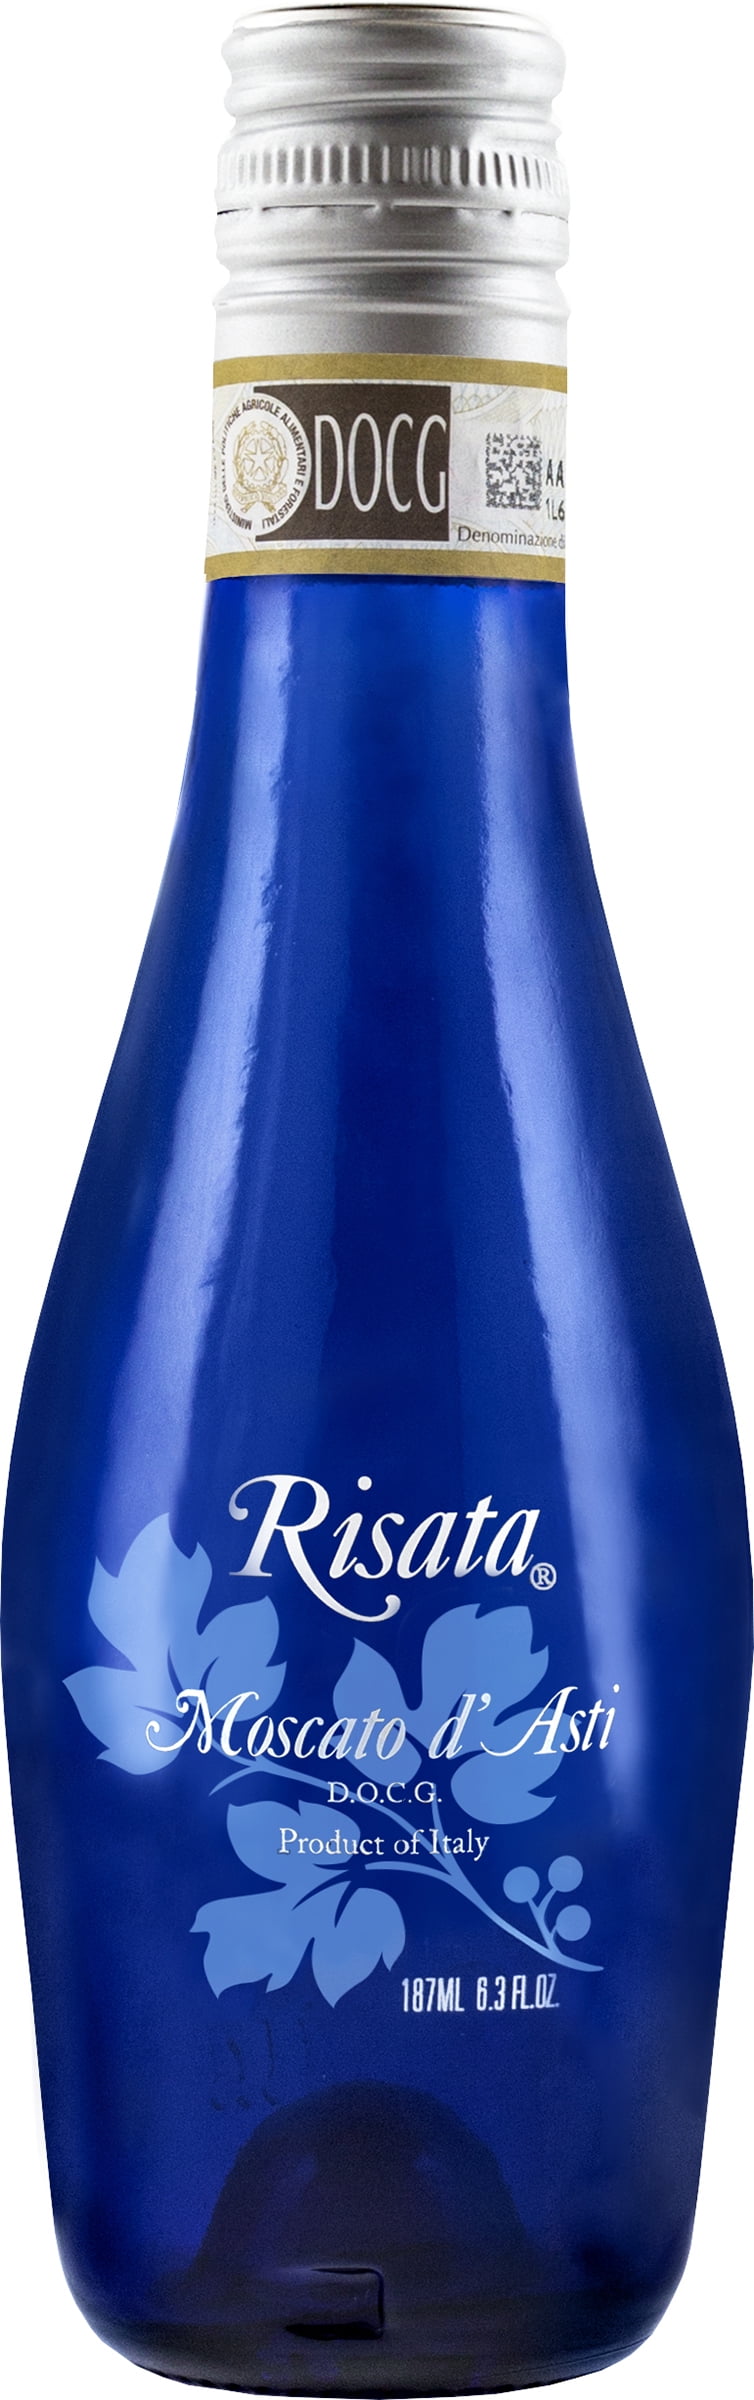 Risata Moscato, d'Asti D.O.C.G. Italy, 5.5% ABV, 1-187ml Glass Bottle, 1-187ml Serving